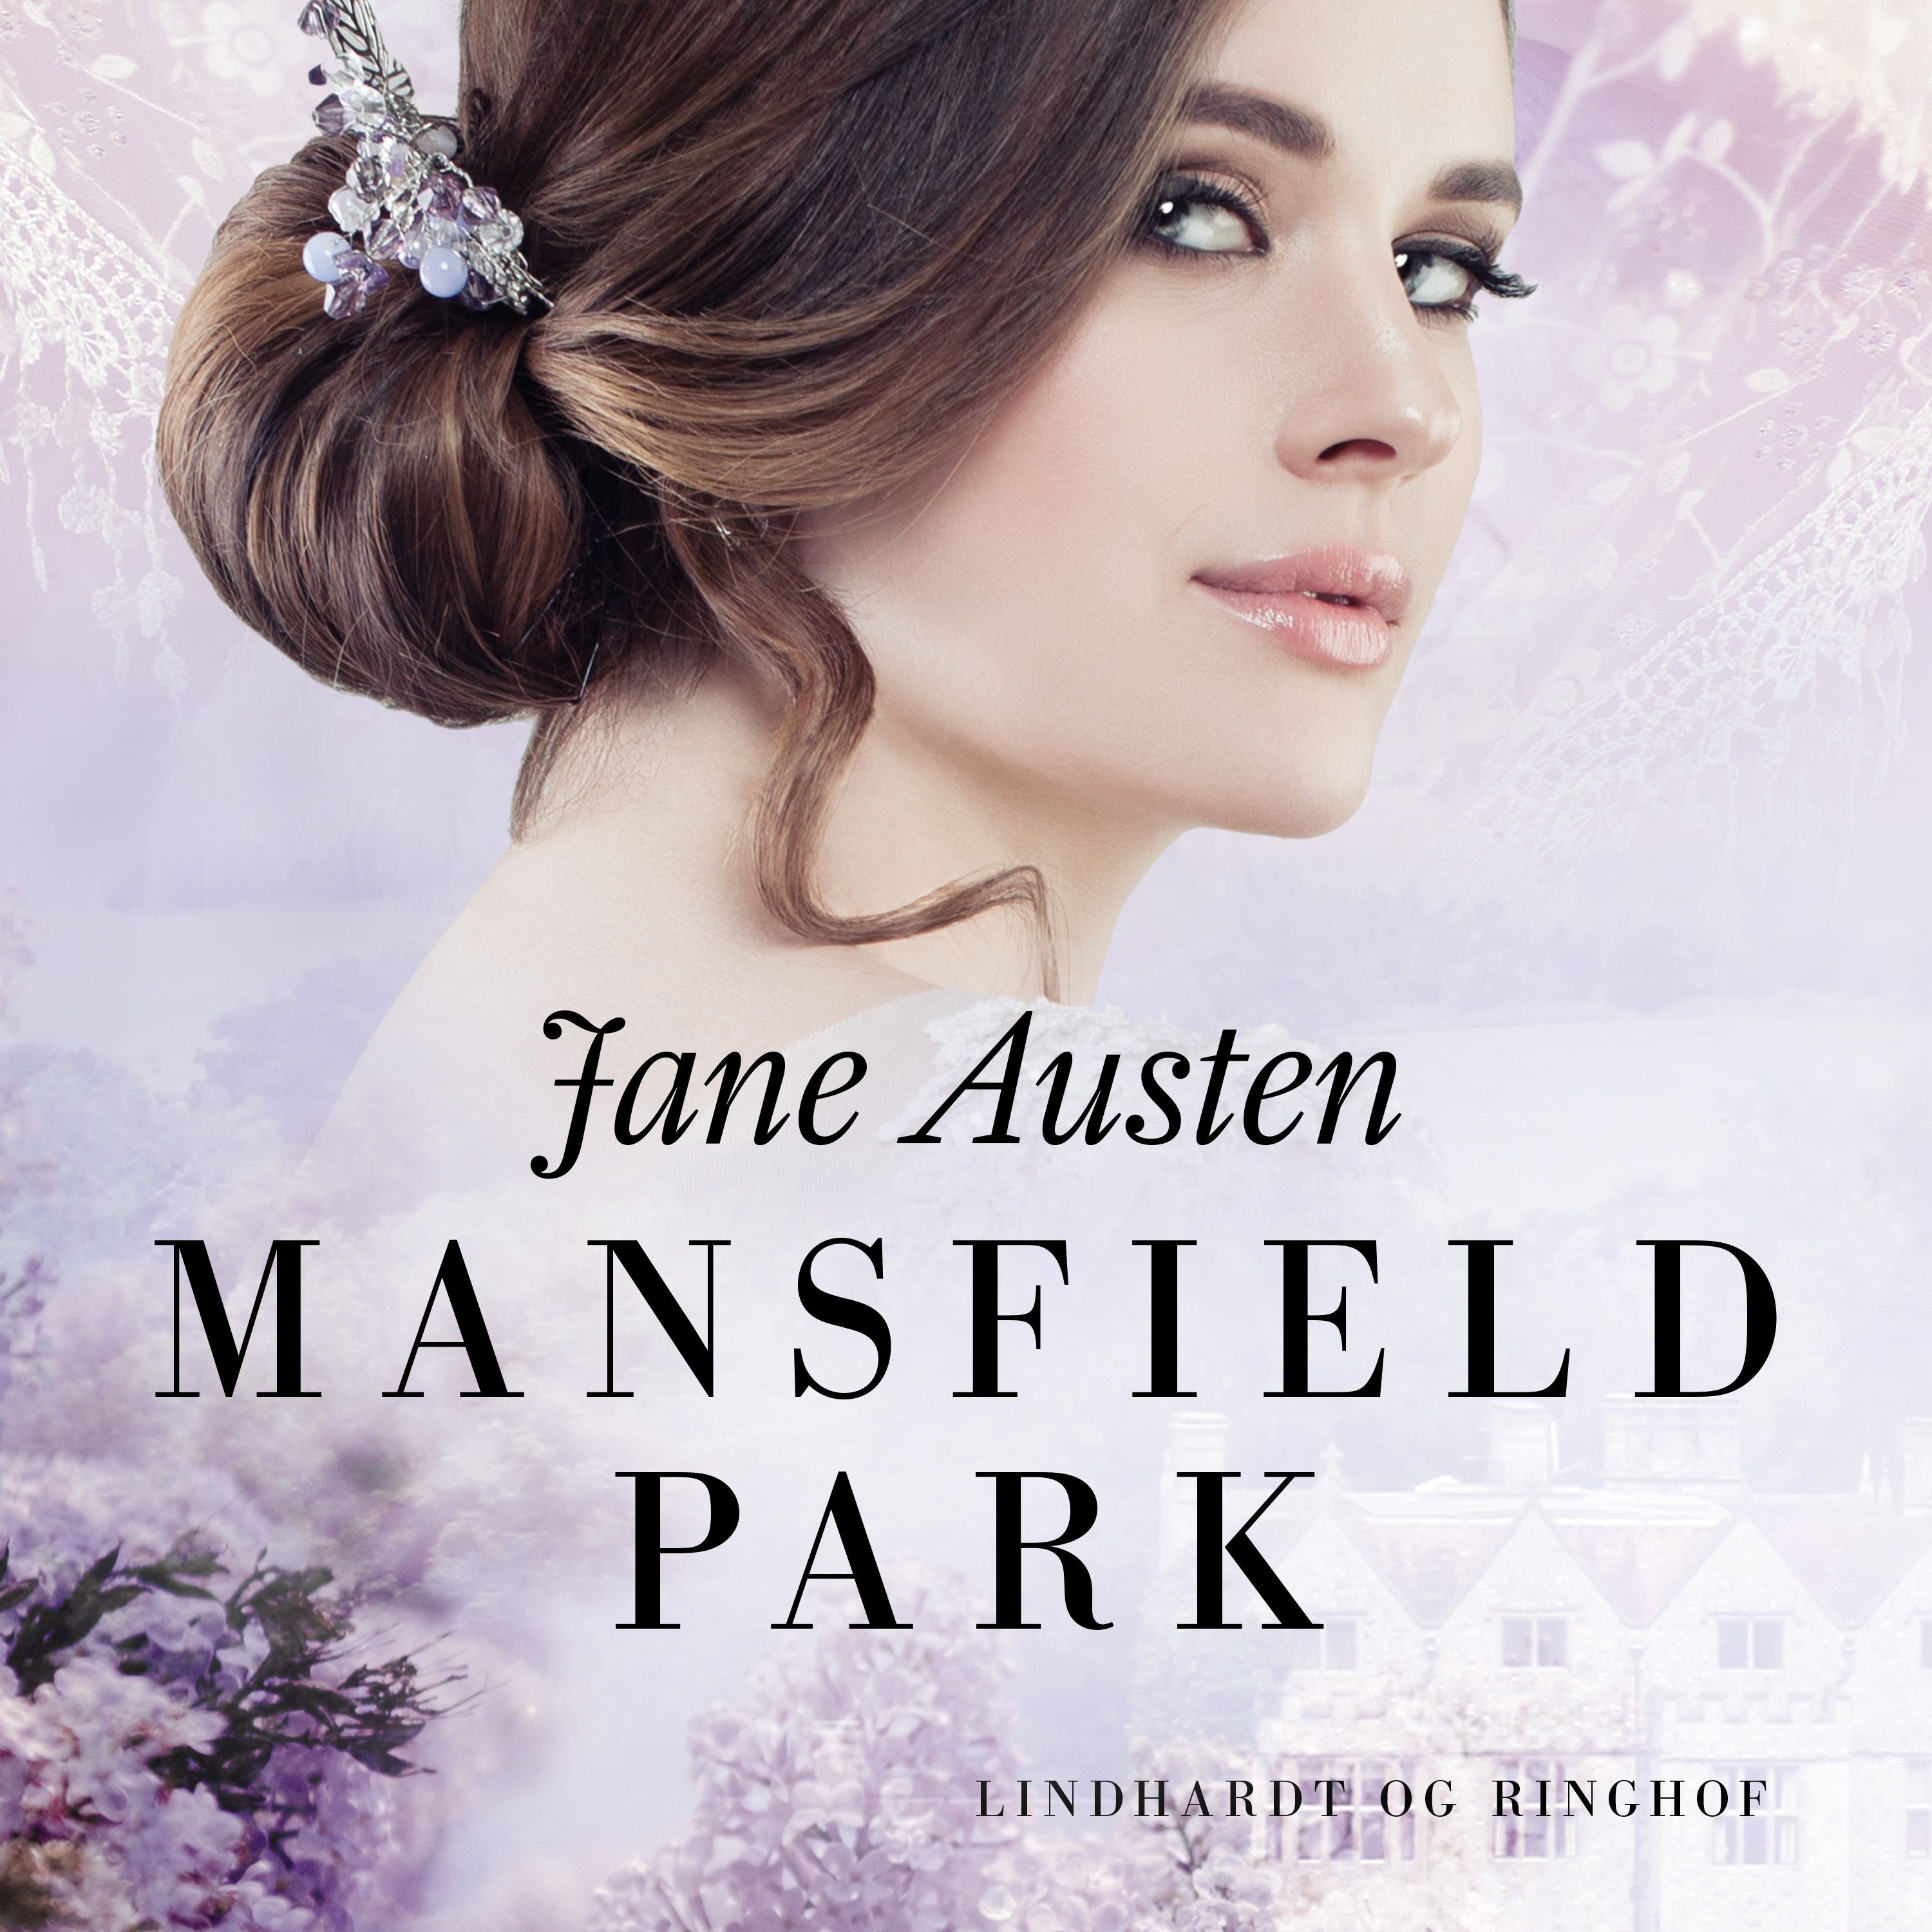 Mansfield Park, lydbog af Jane Austen